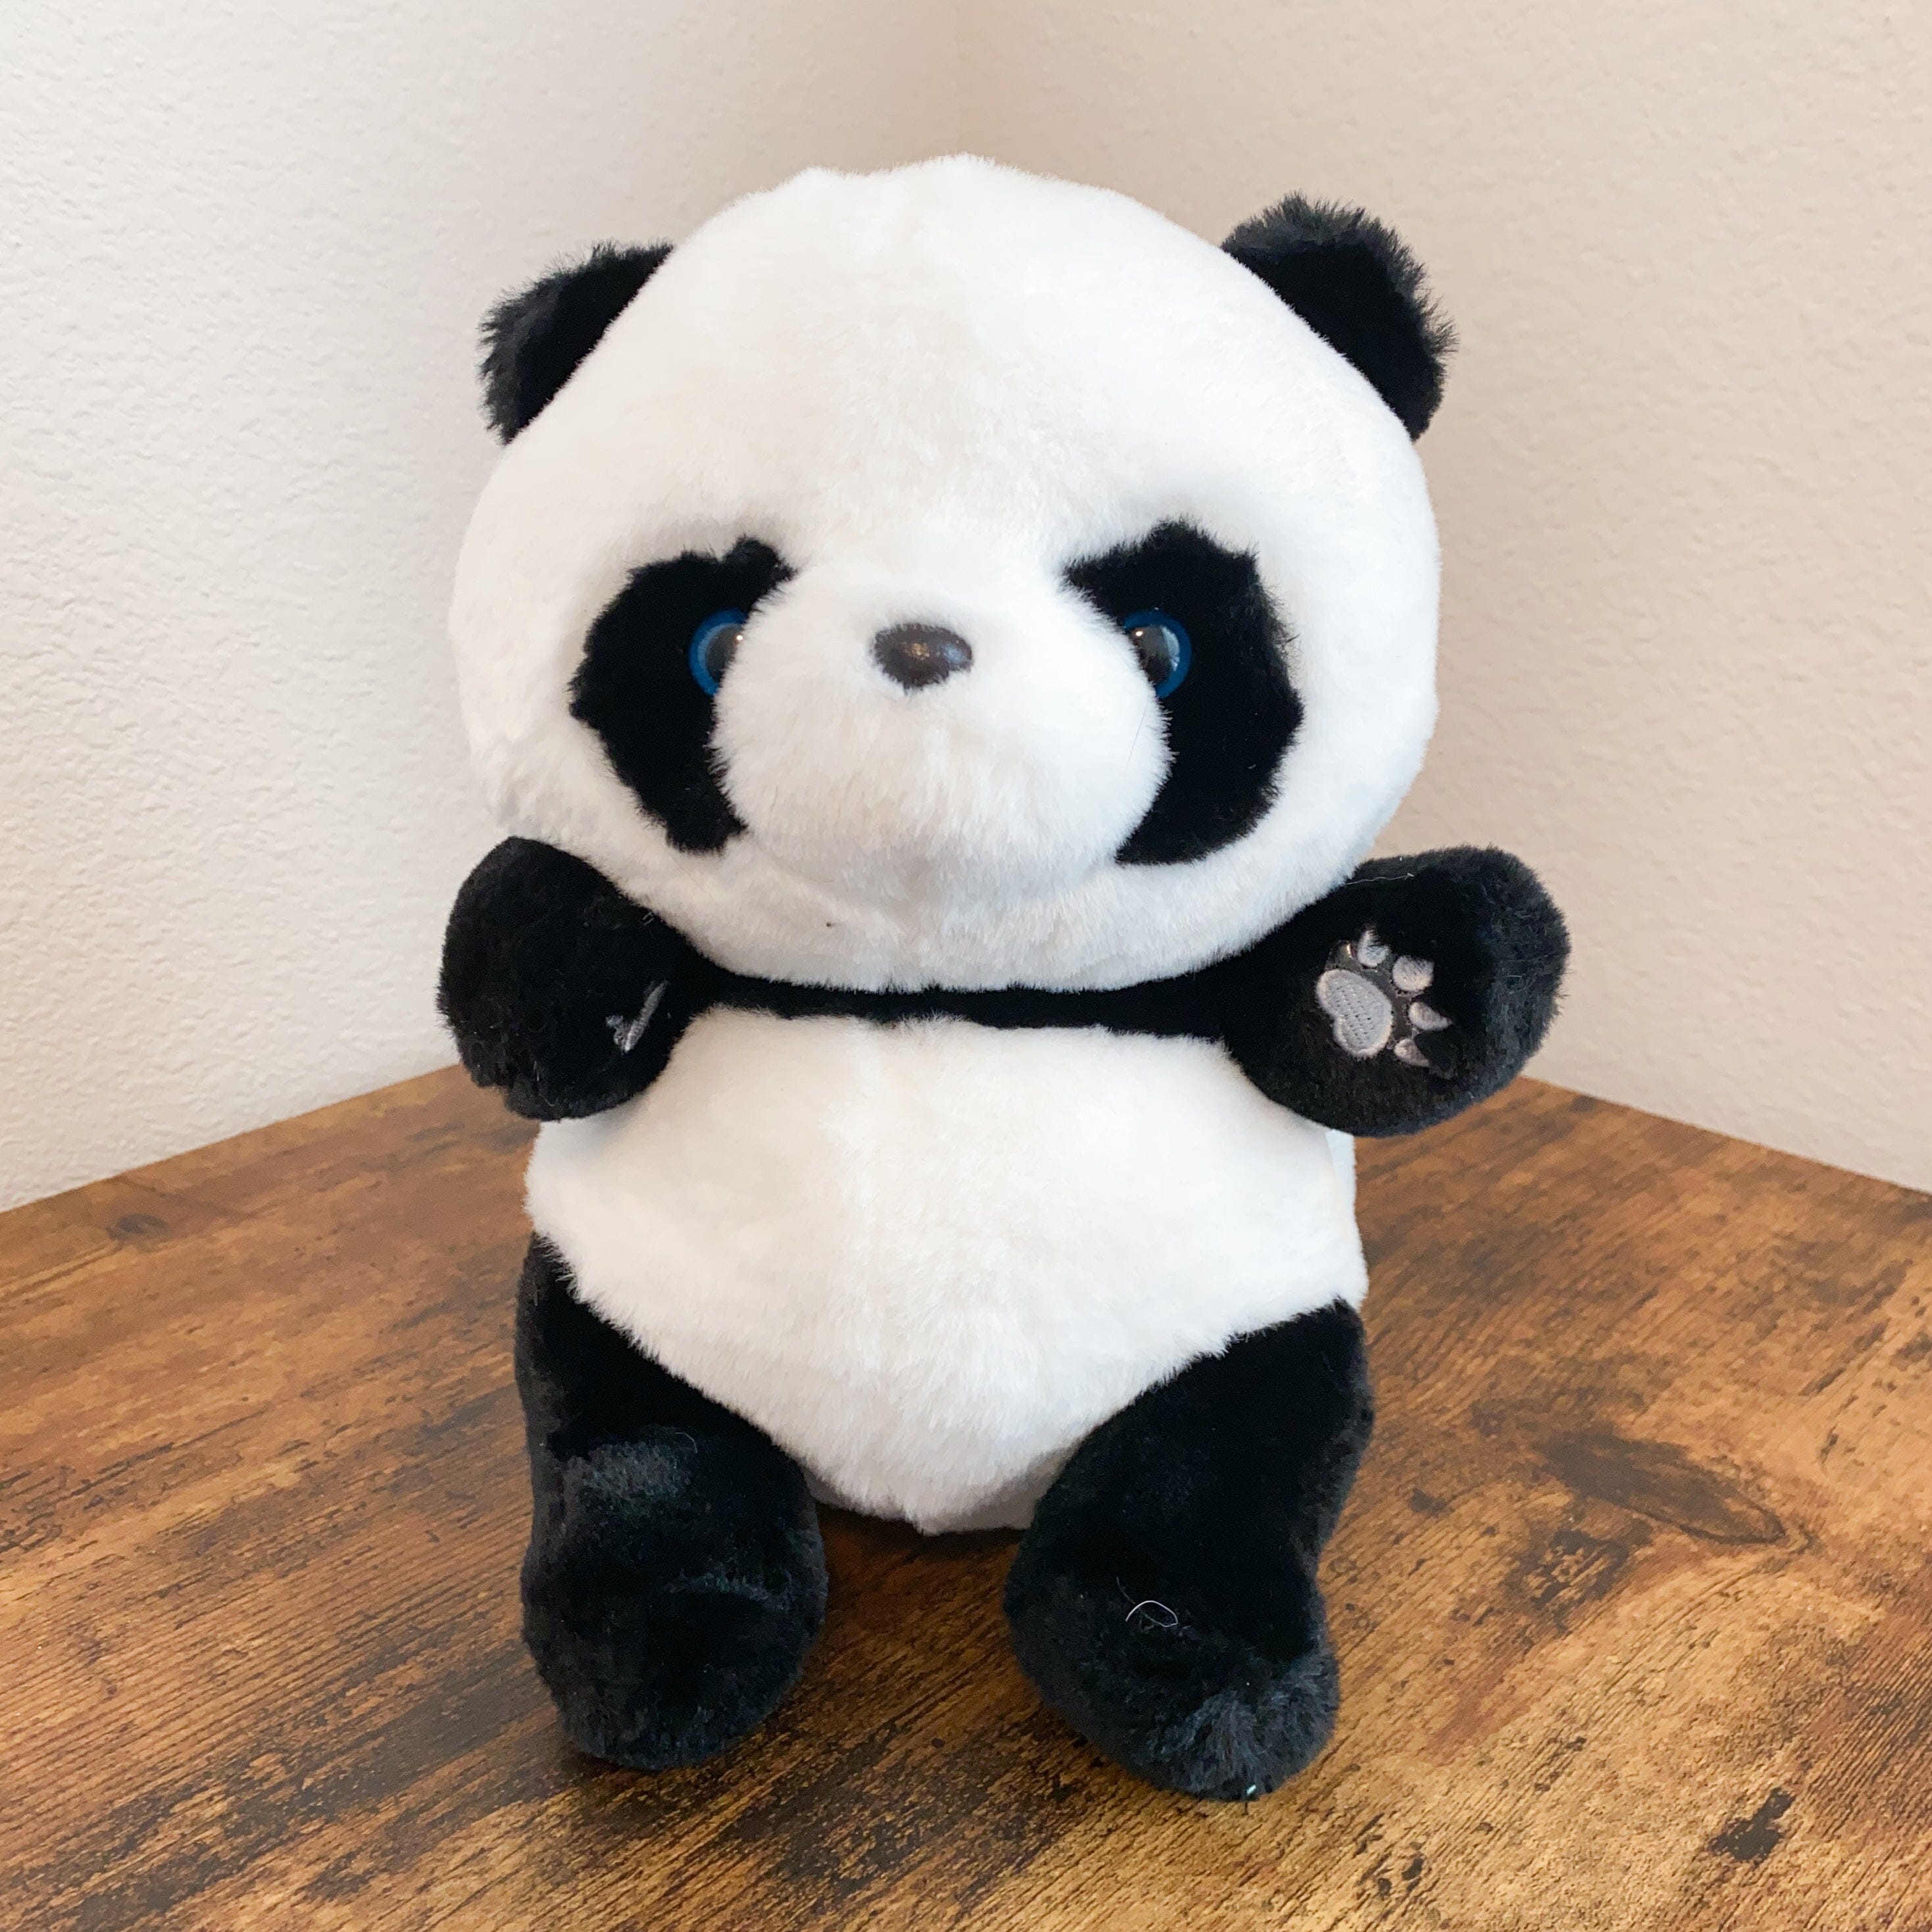 Cuddly Panda Plush The Autistic Innovator Extra-Small 